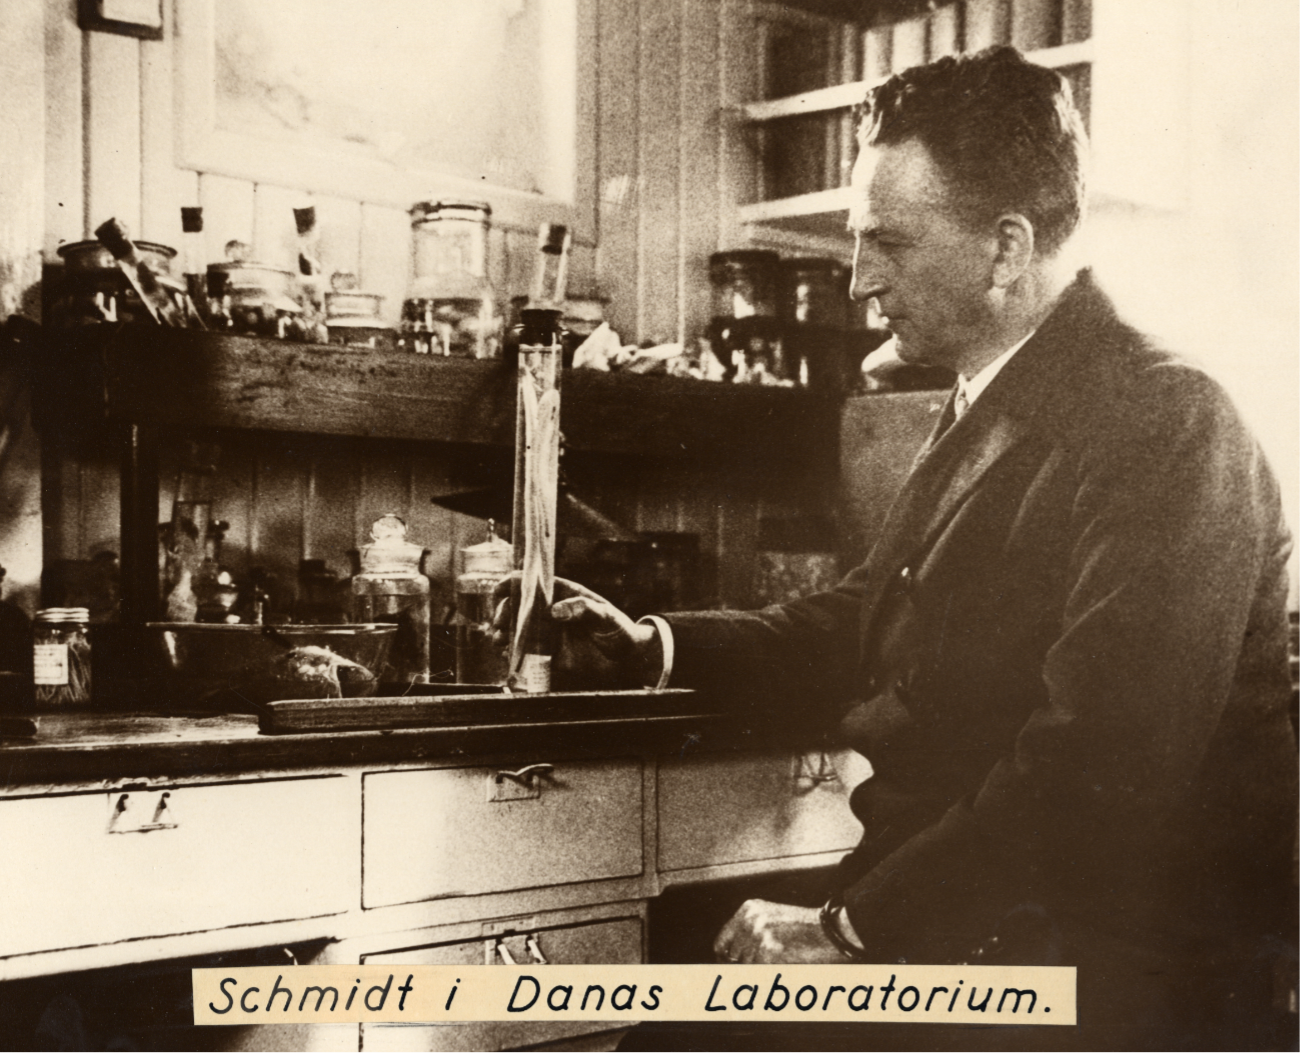 Schmidt working in a laboratory